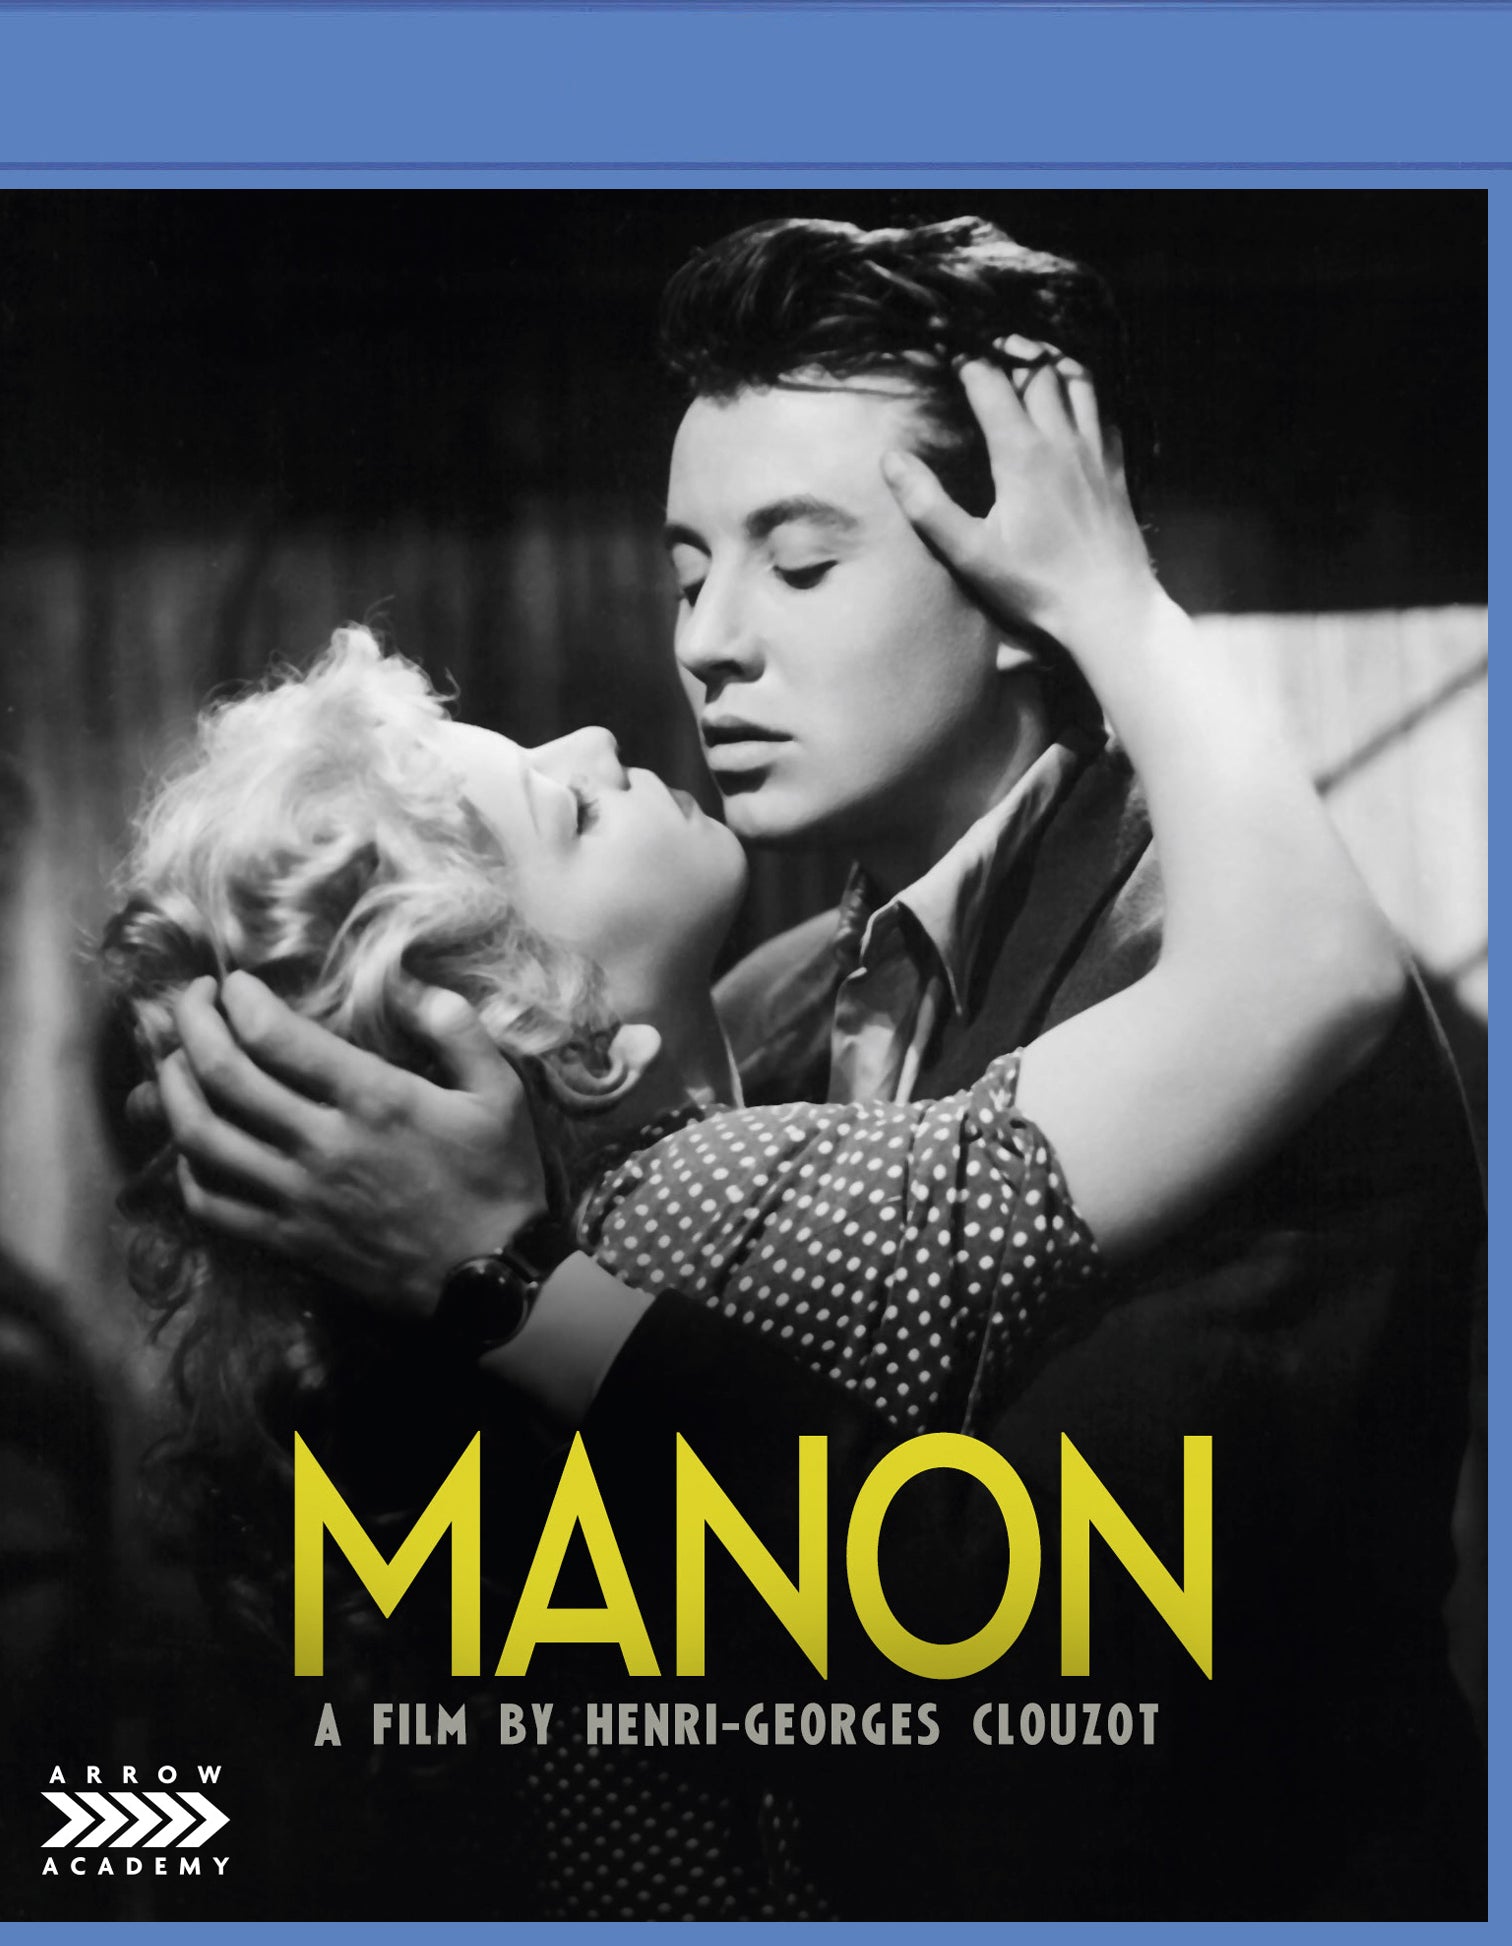 Manon [Blu-ray] cover art